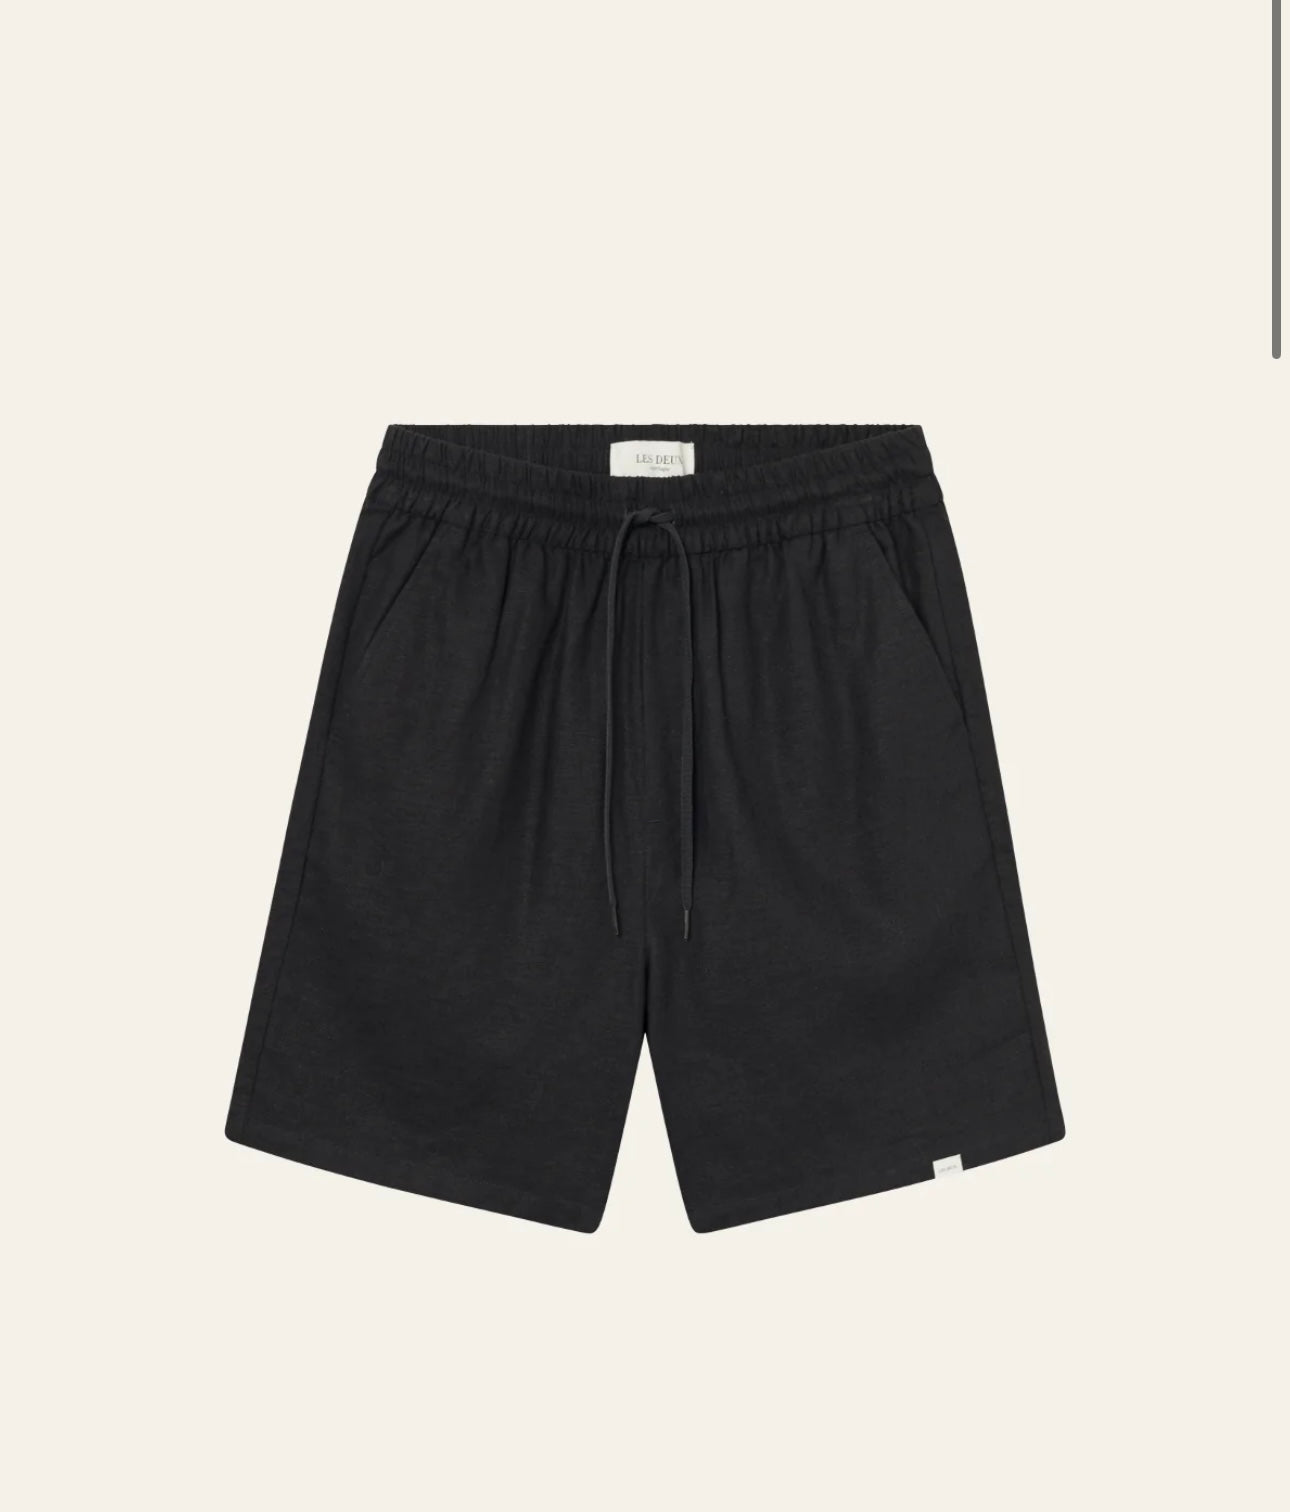 Otto linen shorts